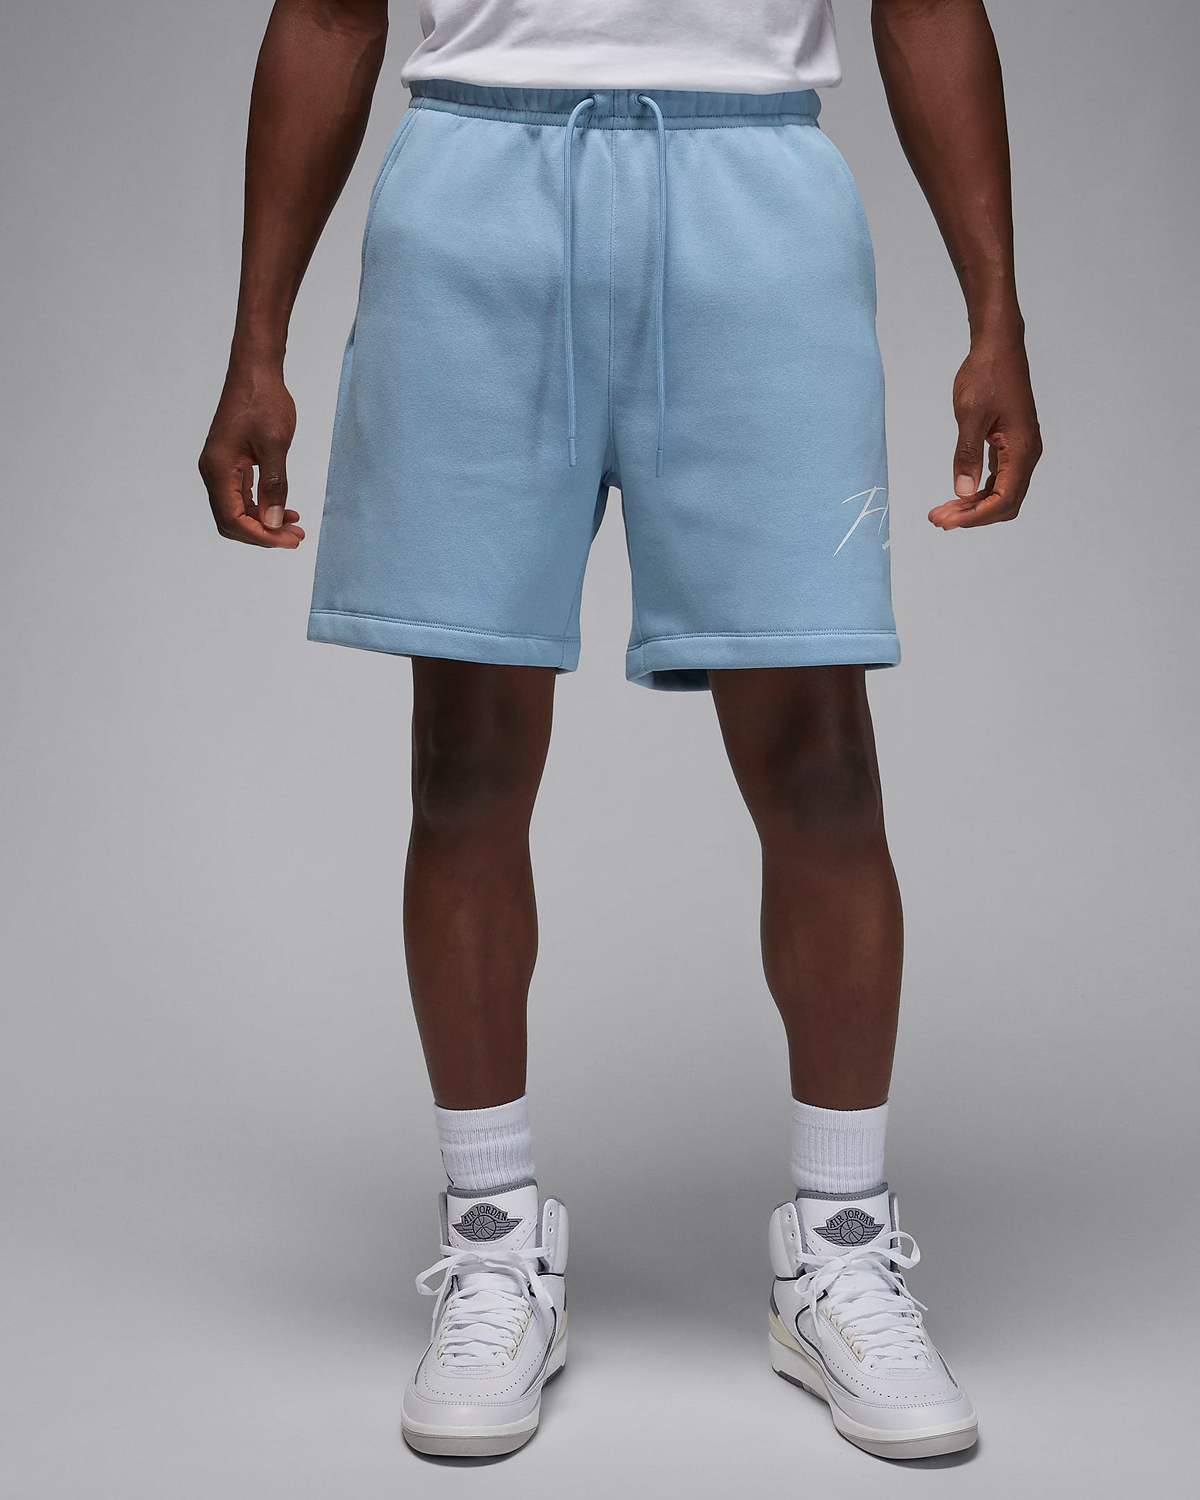 Jordan-Brooklyn-Fleece-Shorts-Blue-Grey-1